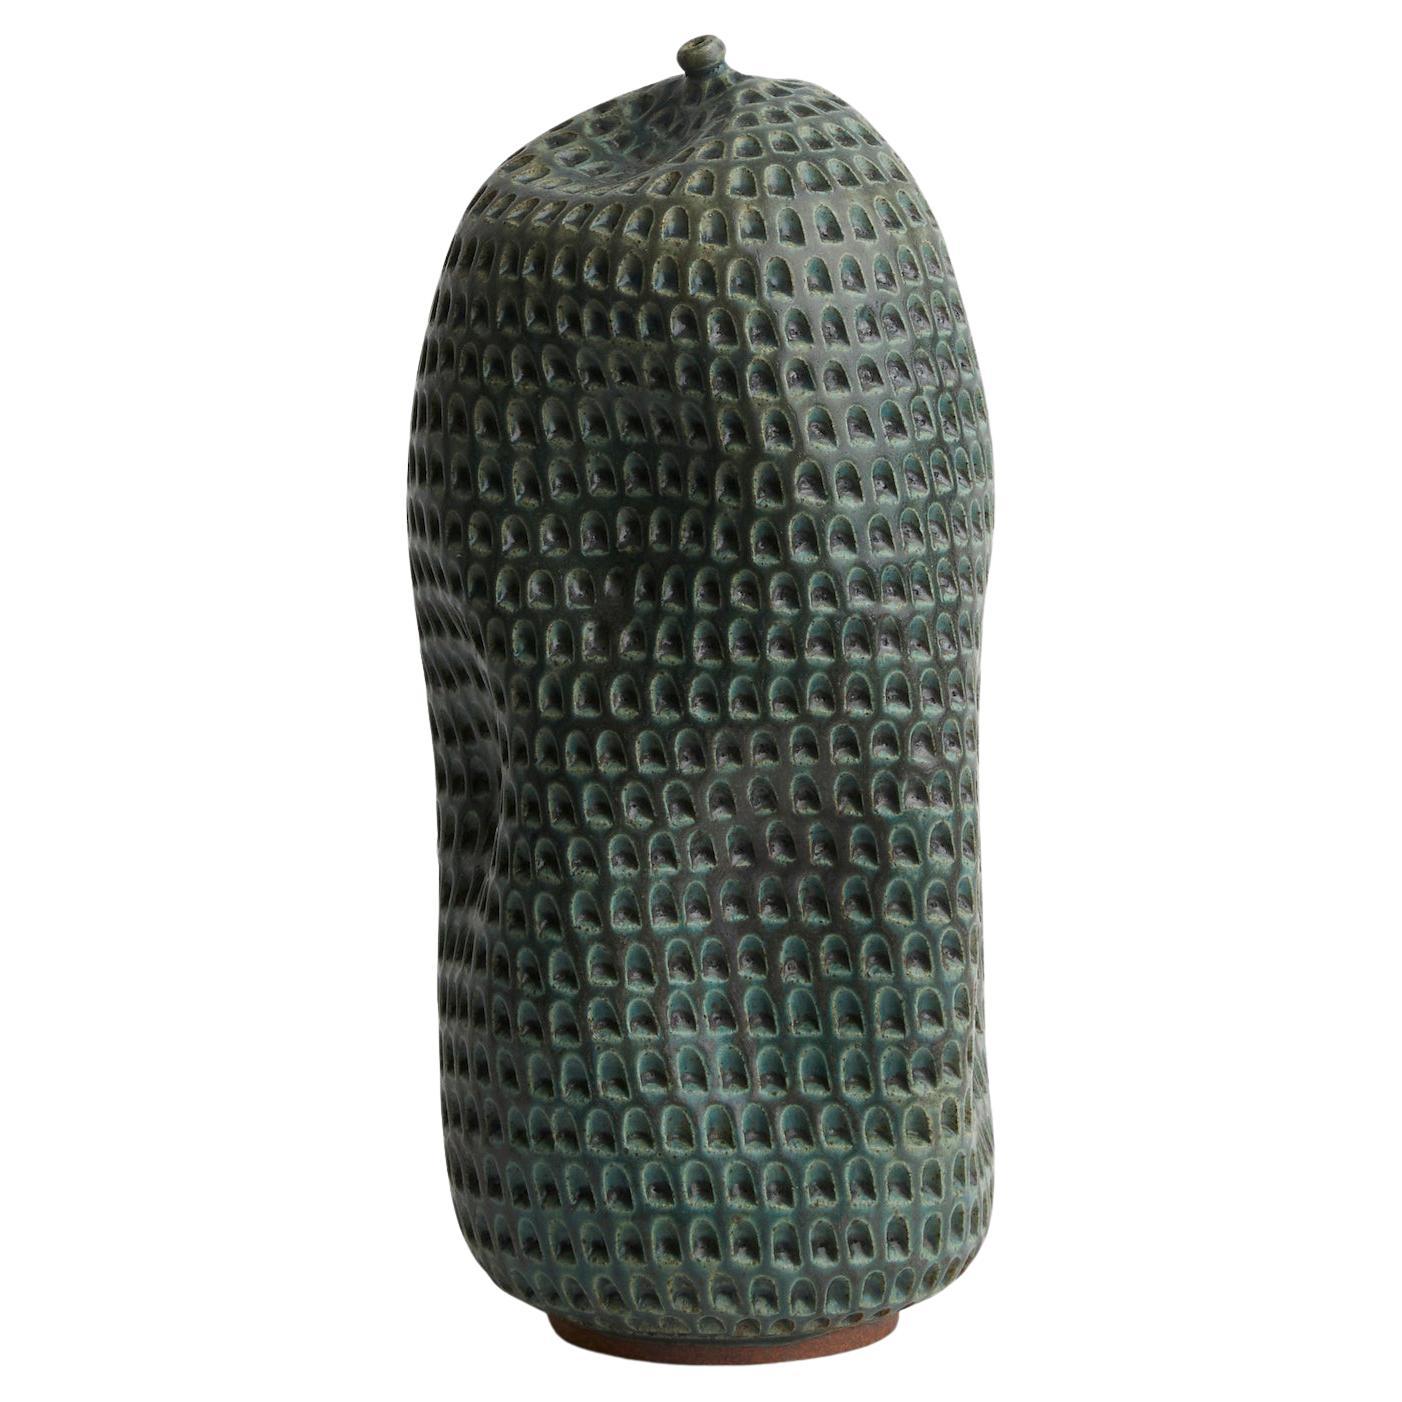 Skoby Joe Bronze Textured Ceramic Vase Wabi Sabi/ Mid-Century Modern